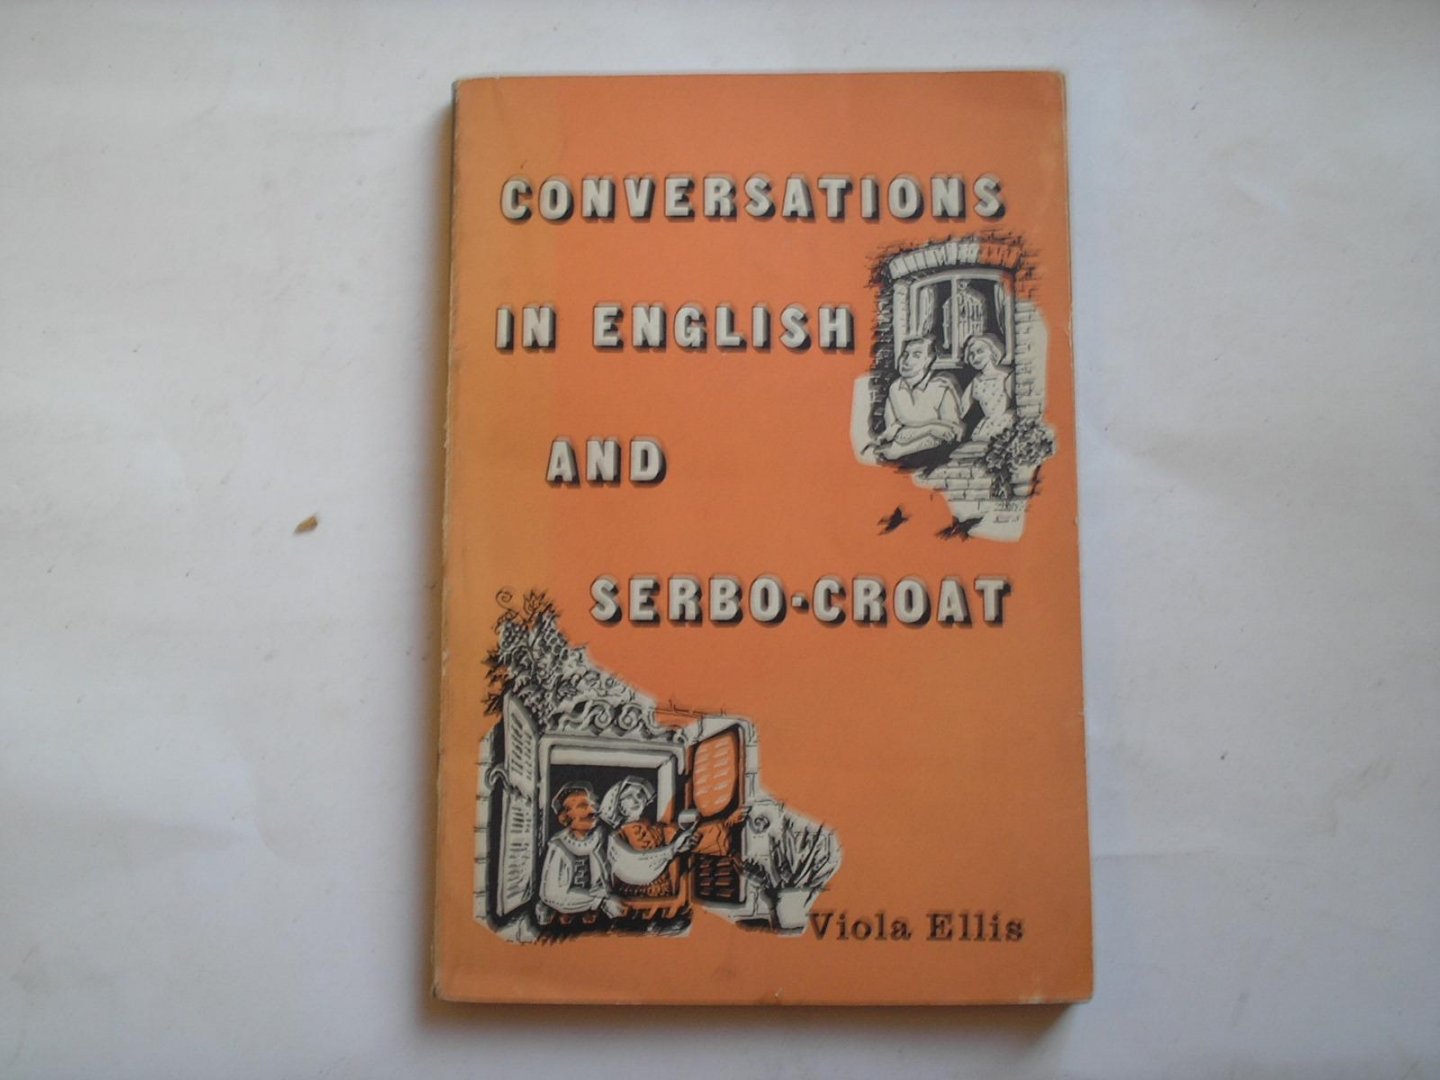 Ellis, Viola - Conversations in English and Serbo-Croat